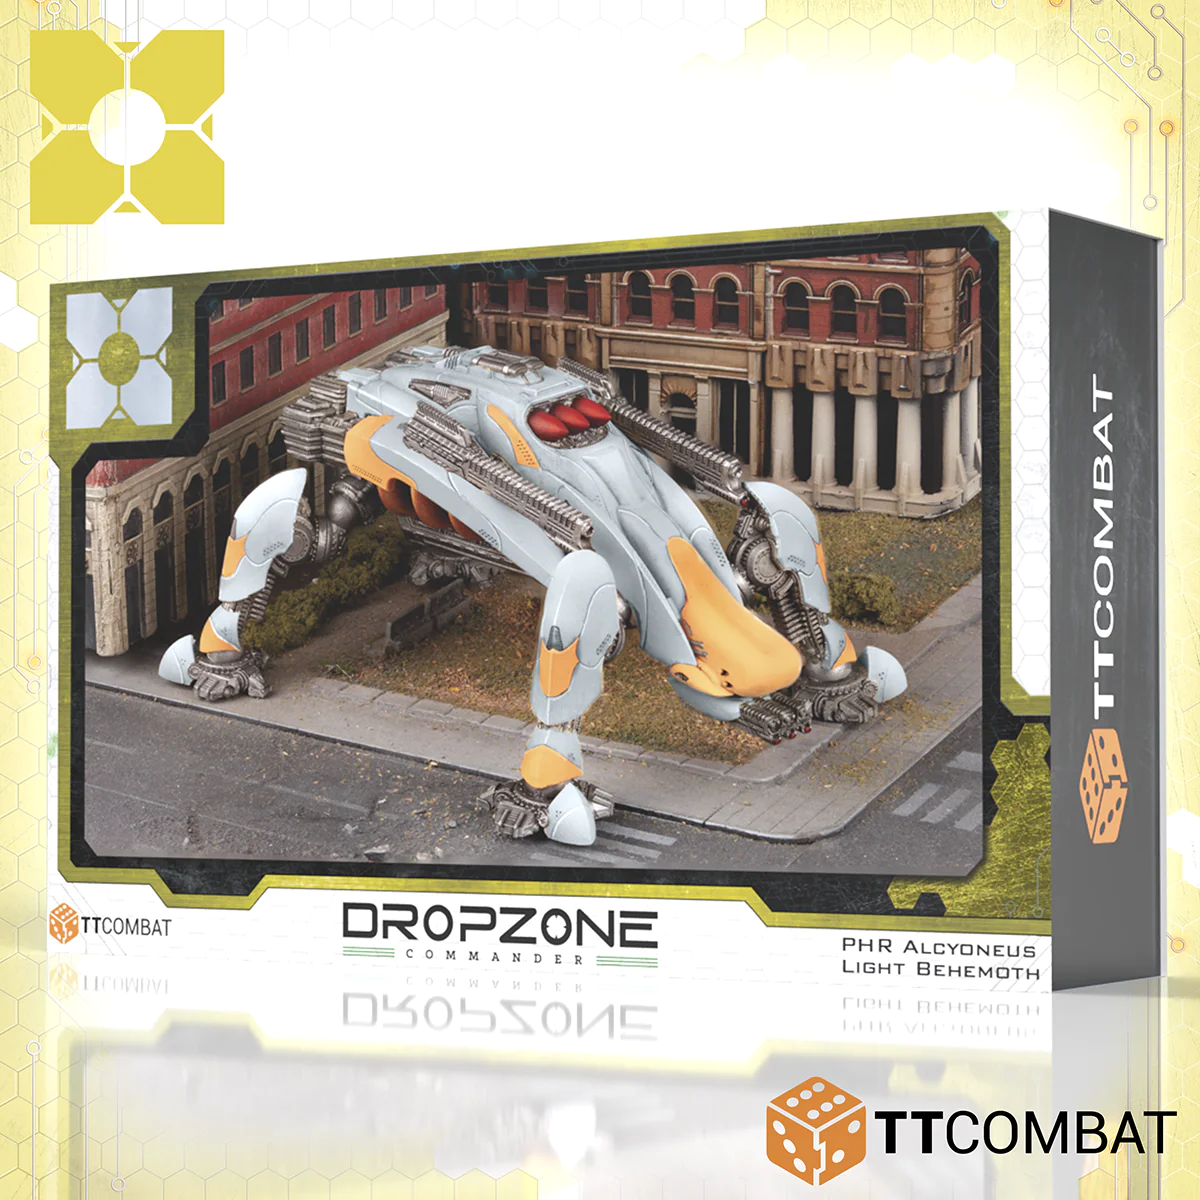 Dropzone Commander - PHR